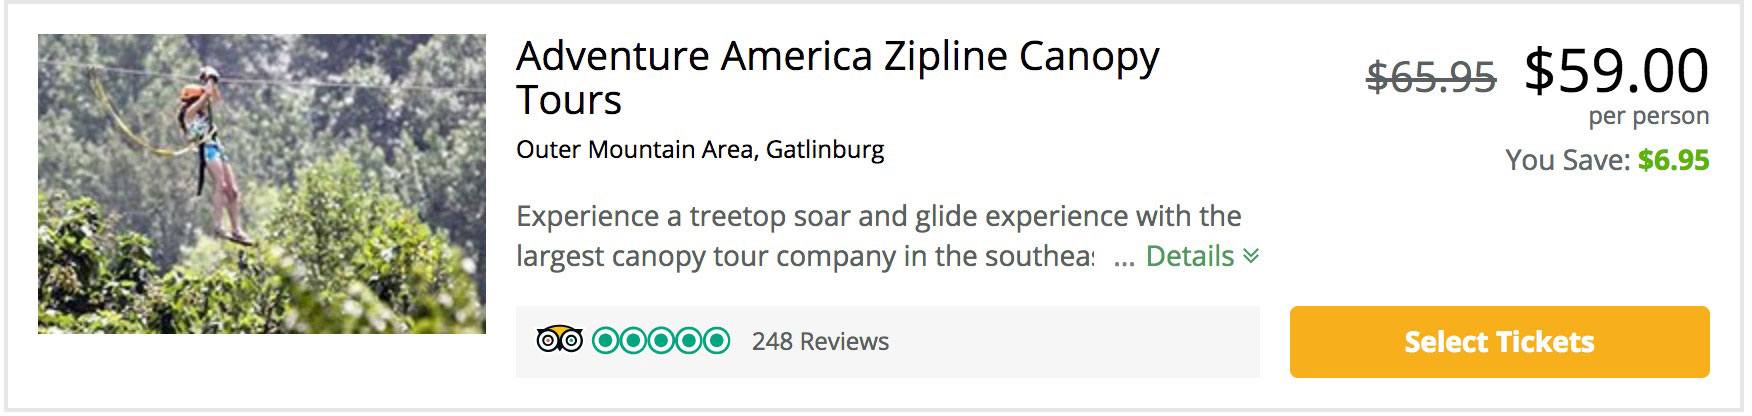 adventure america zipline canopy tours